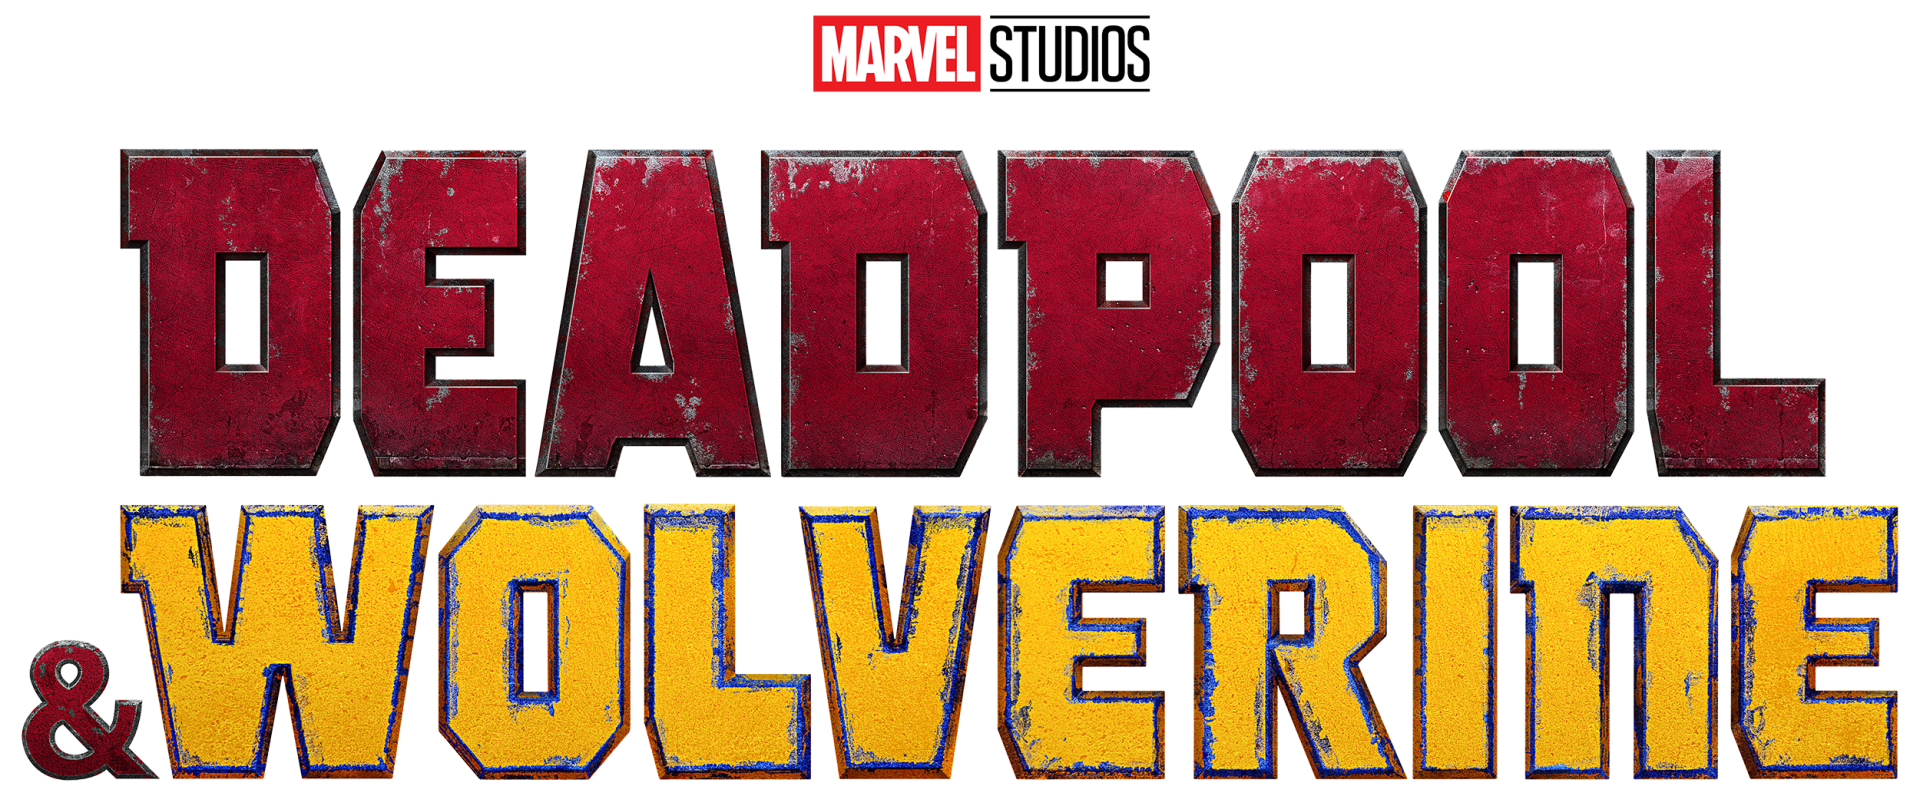 Deadpool et wolverine logo final